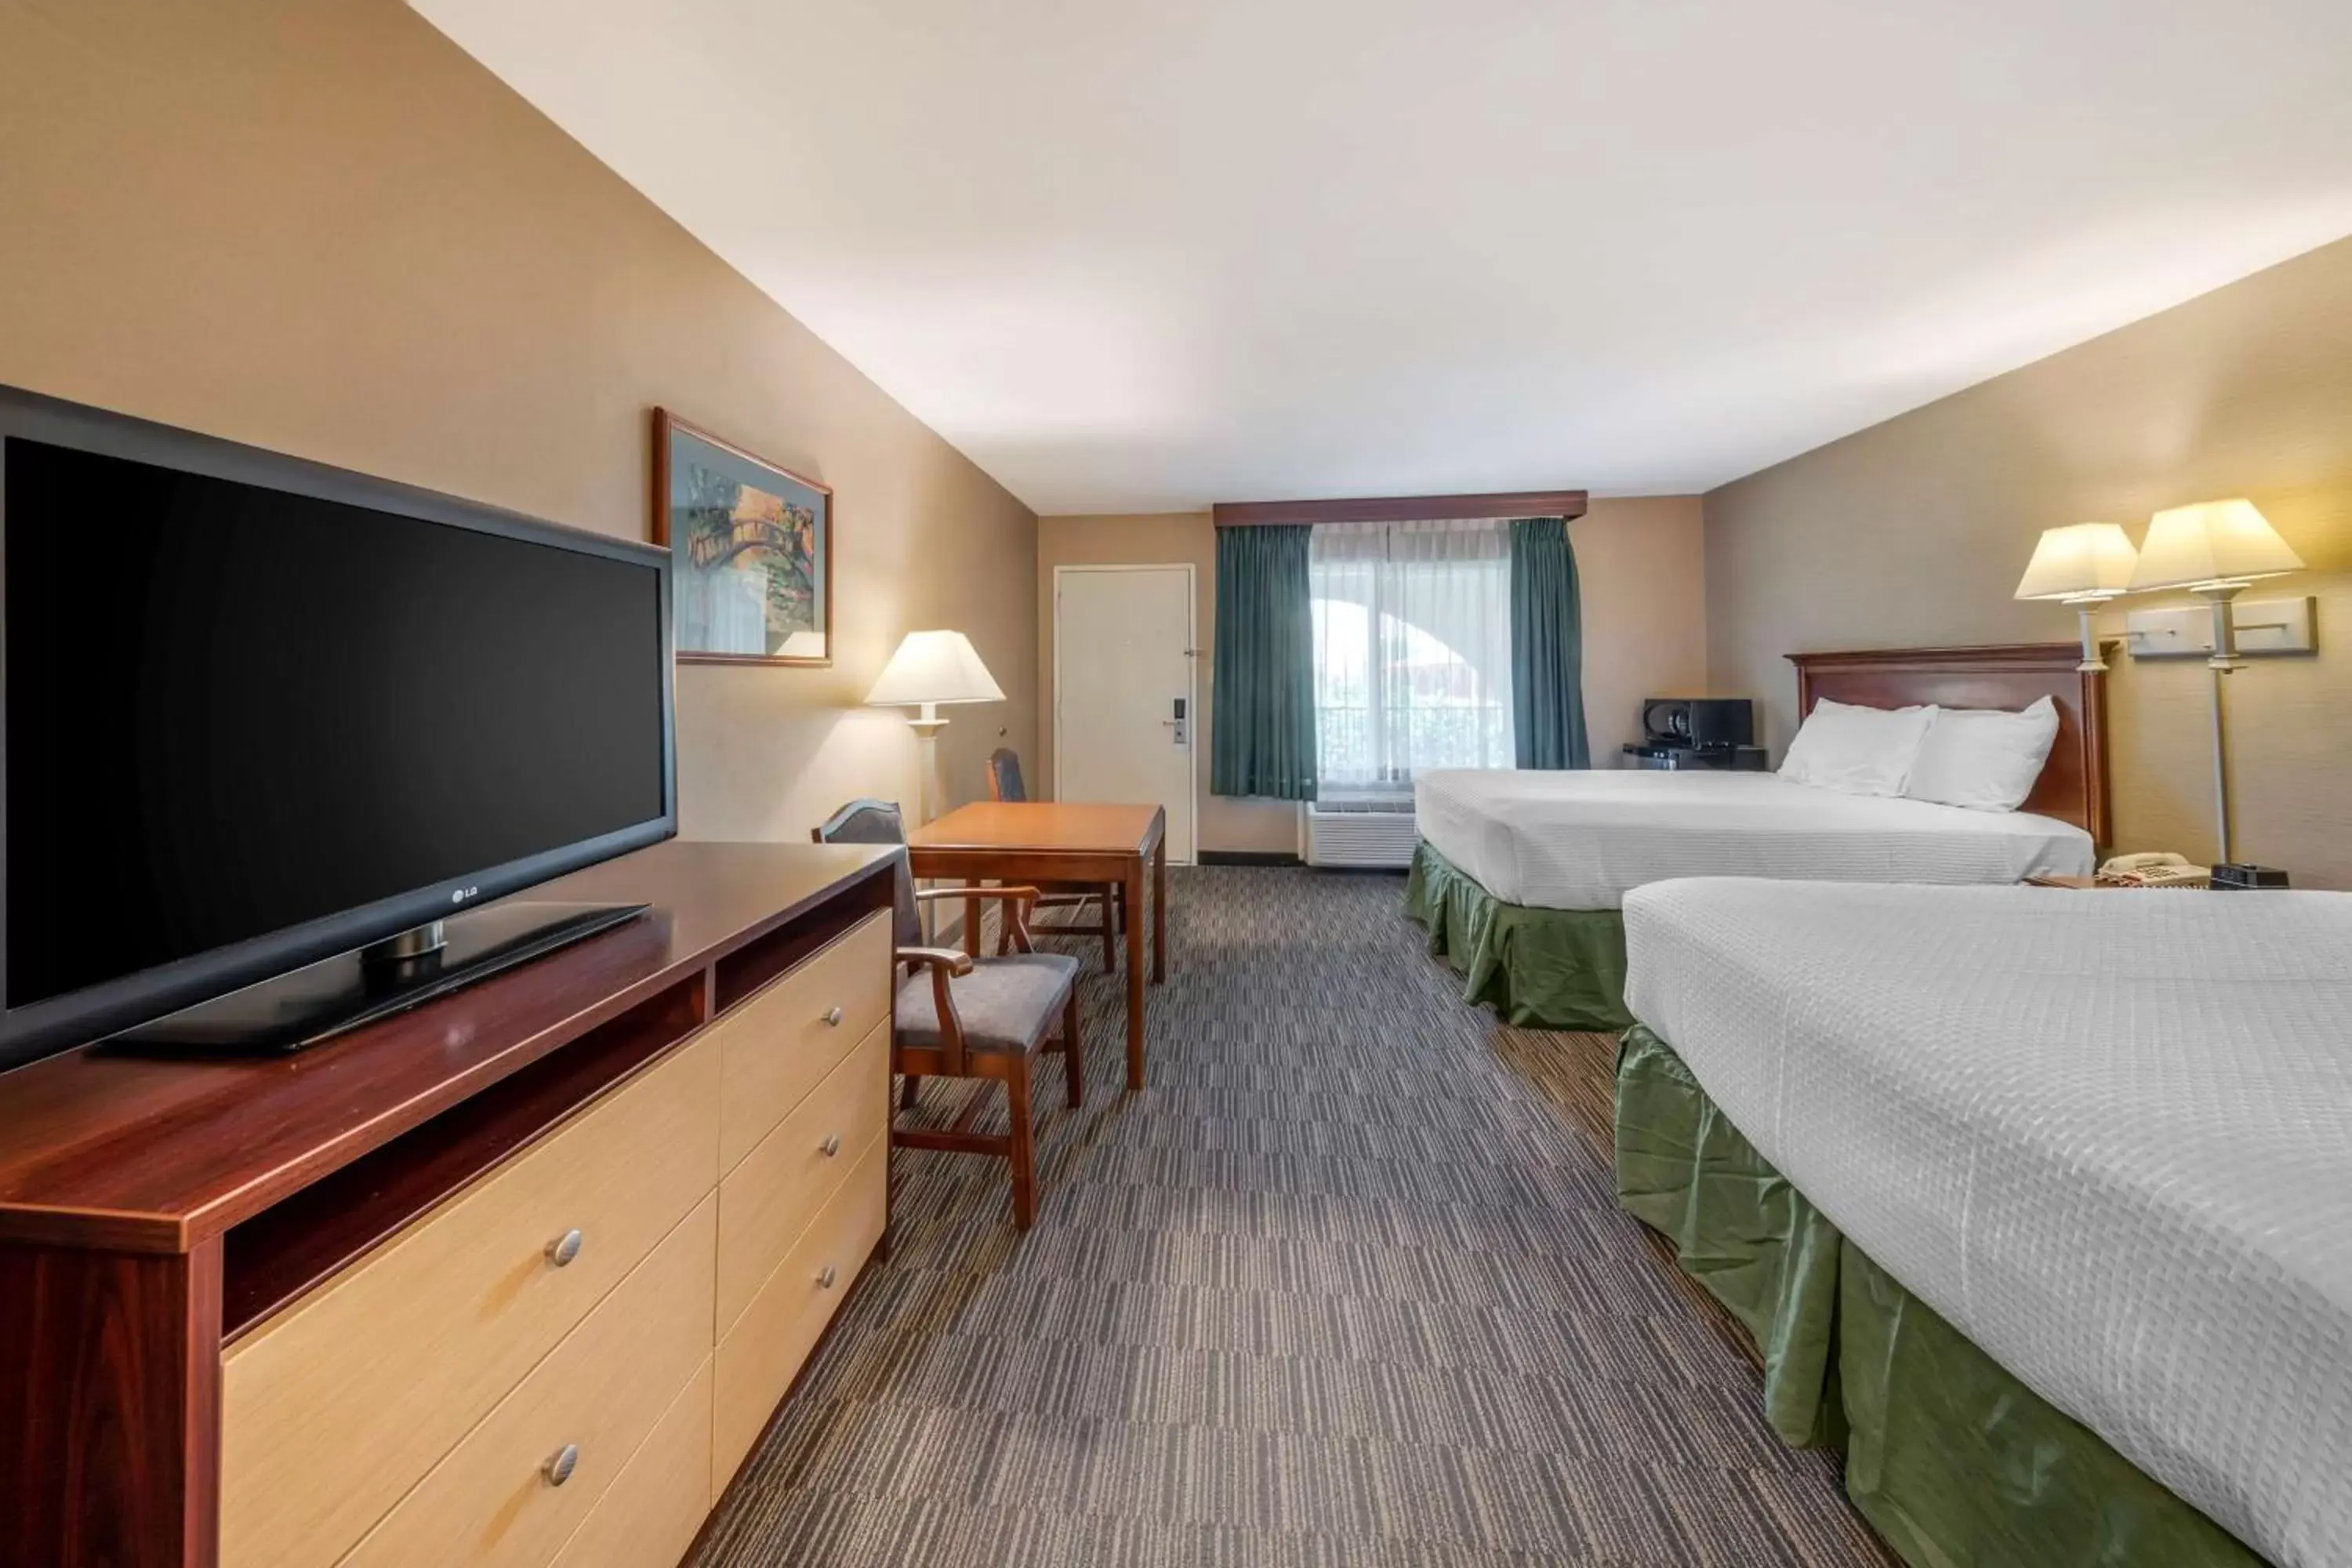 Bedroom, TV/Entertainment Center in Best Western La Posada Motel